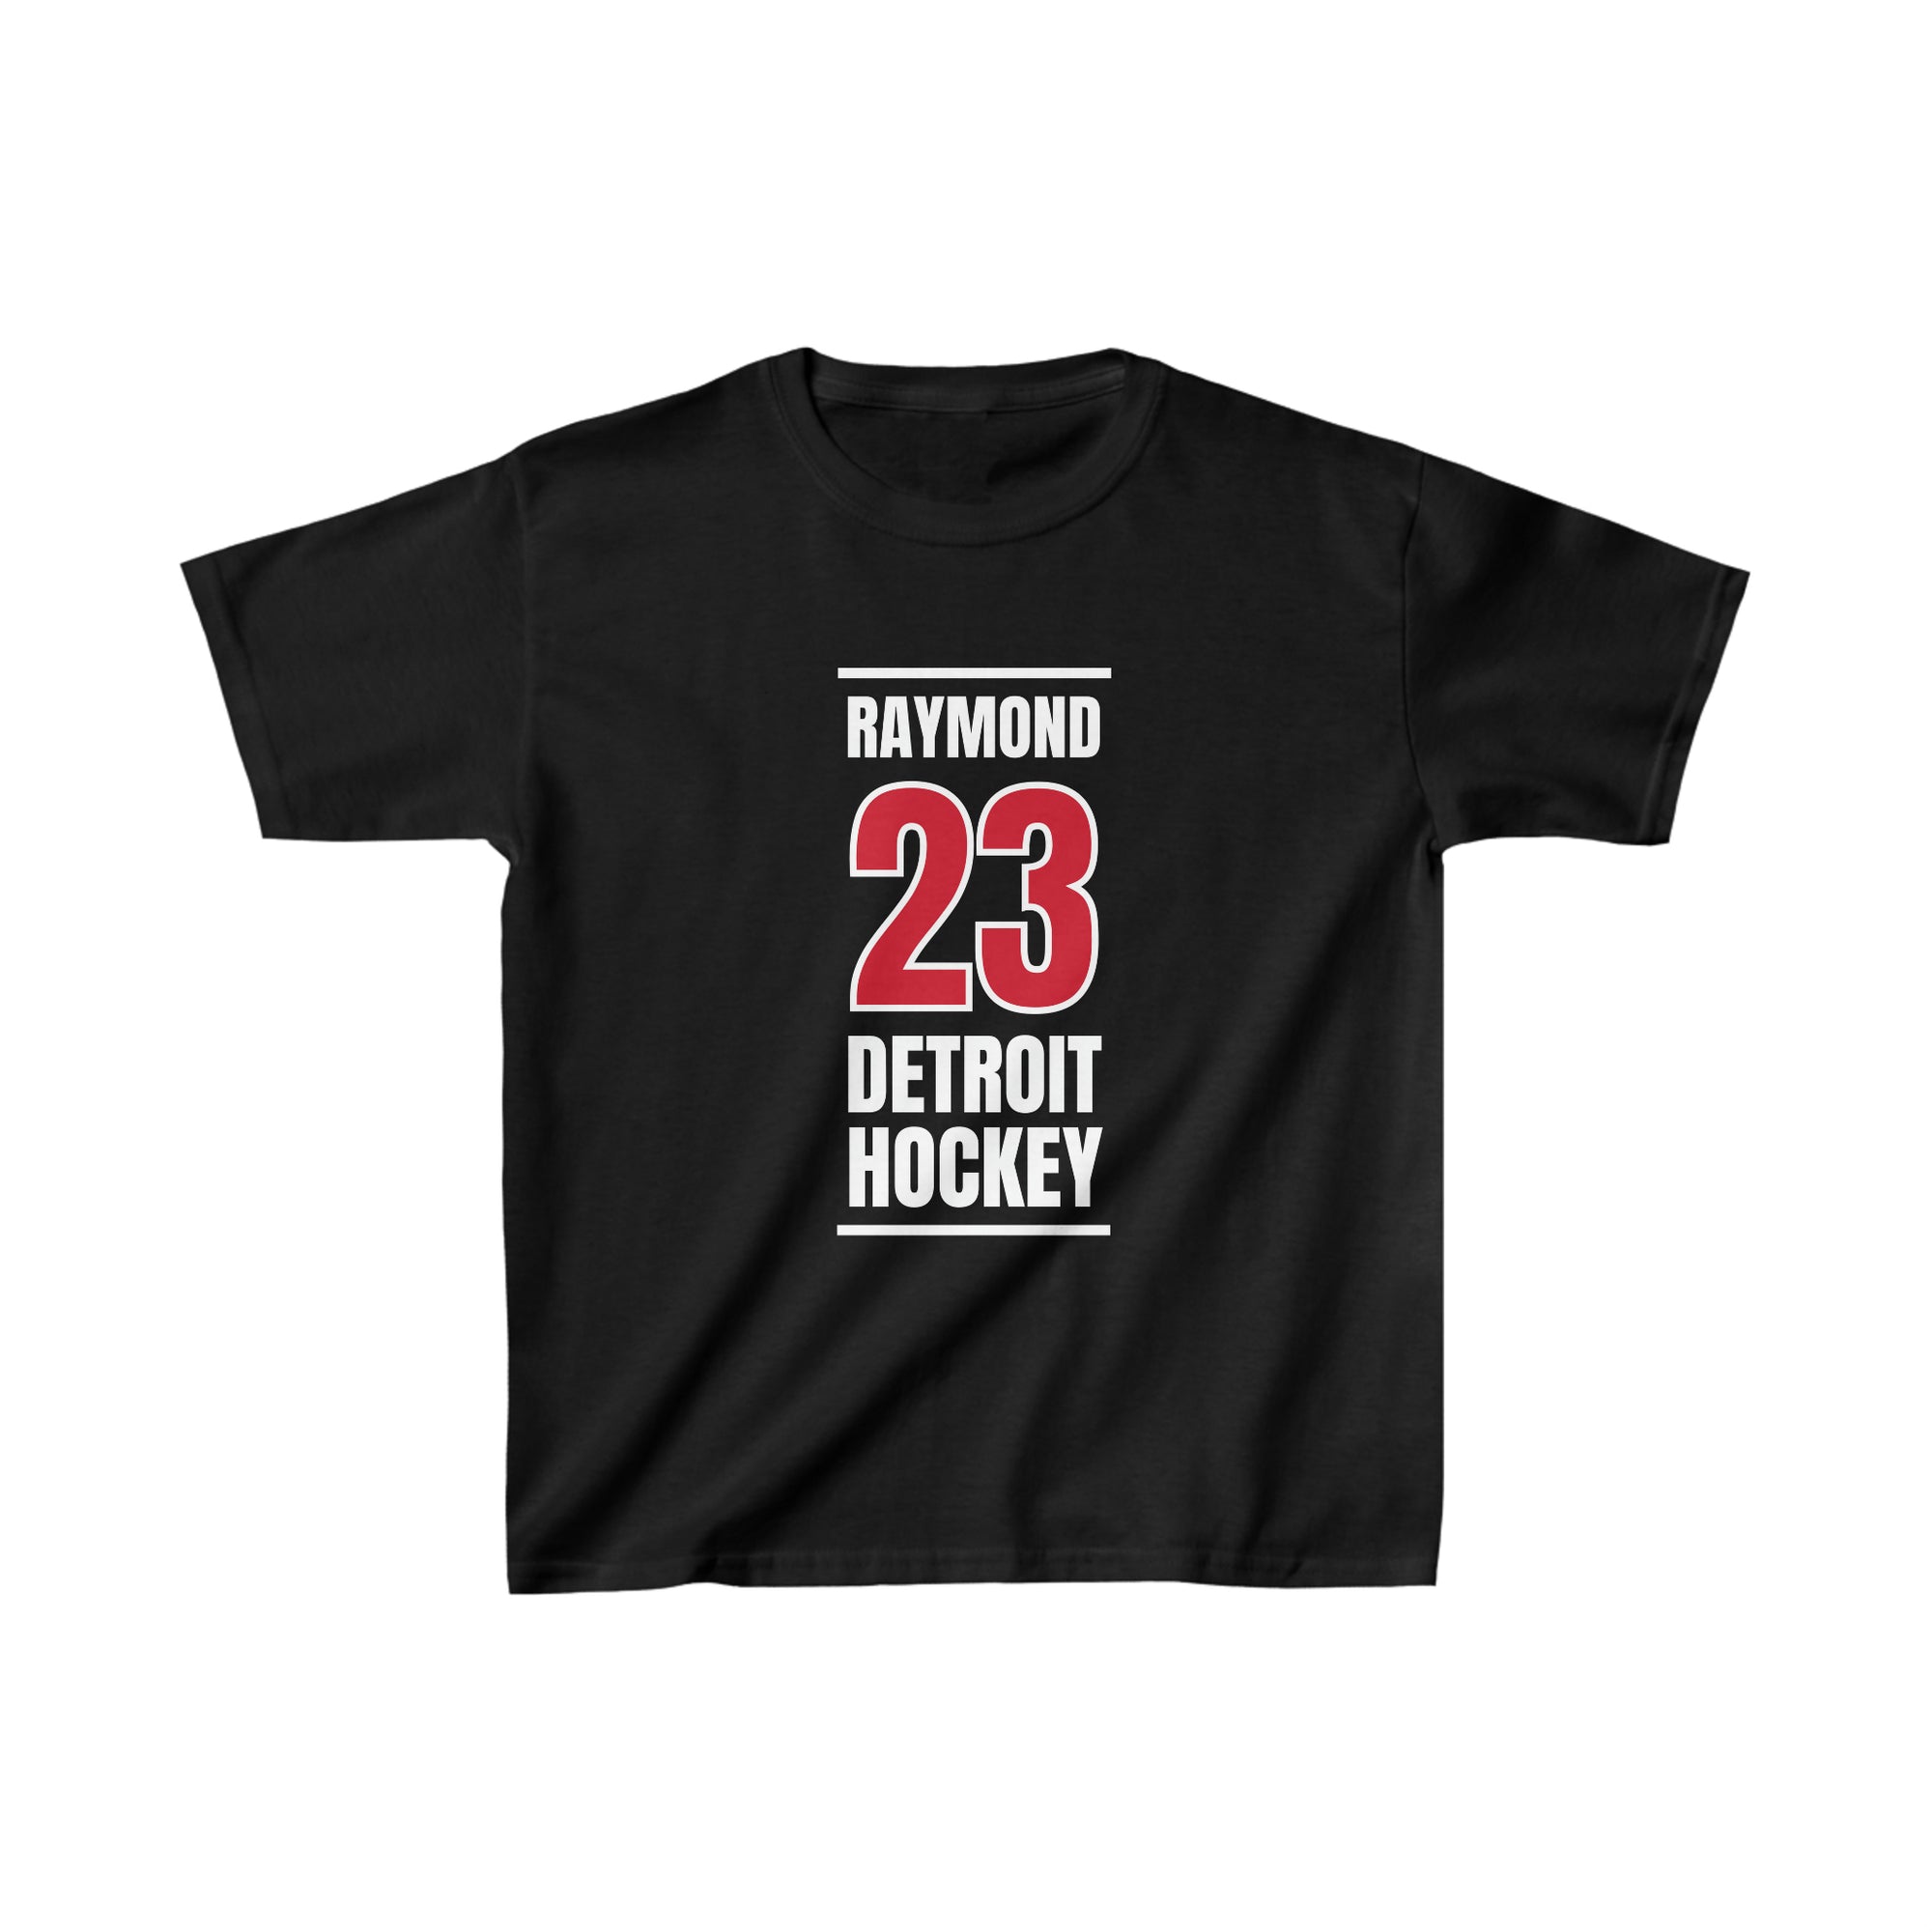 Raymond 23 Detroit Hockey Red Vertical Design Kids Tee